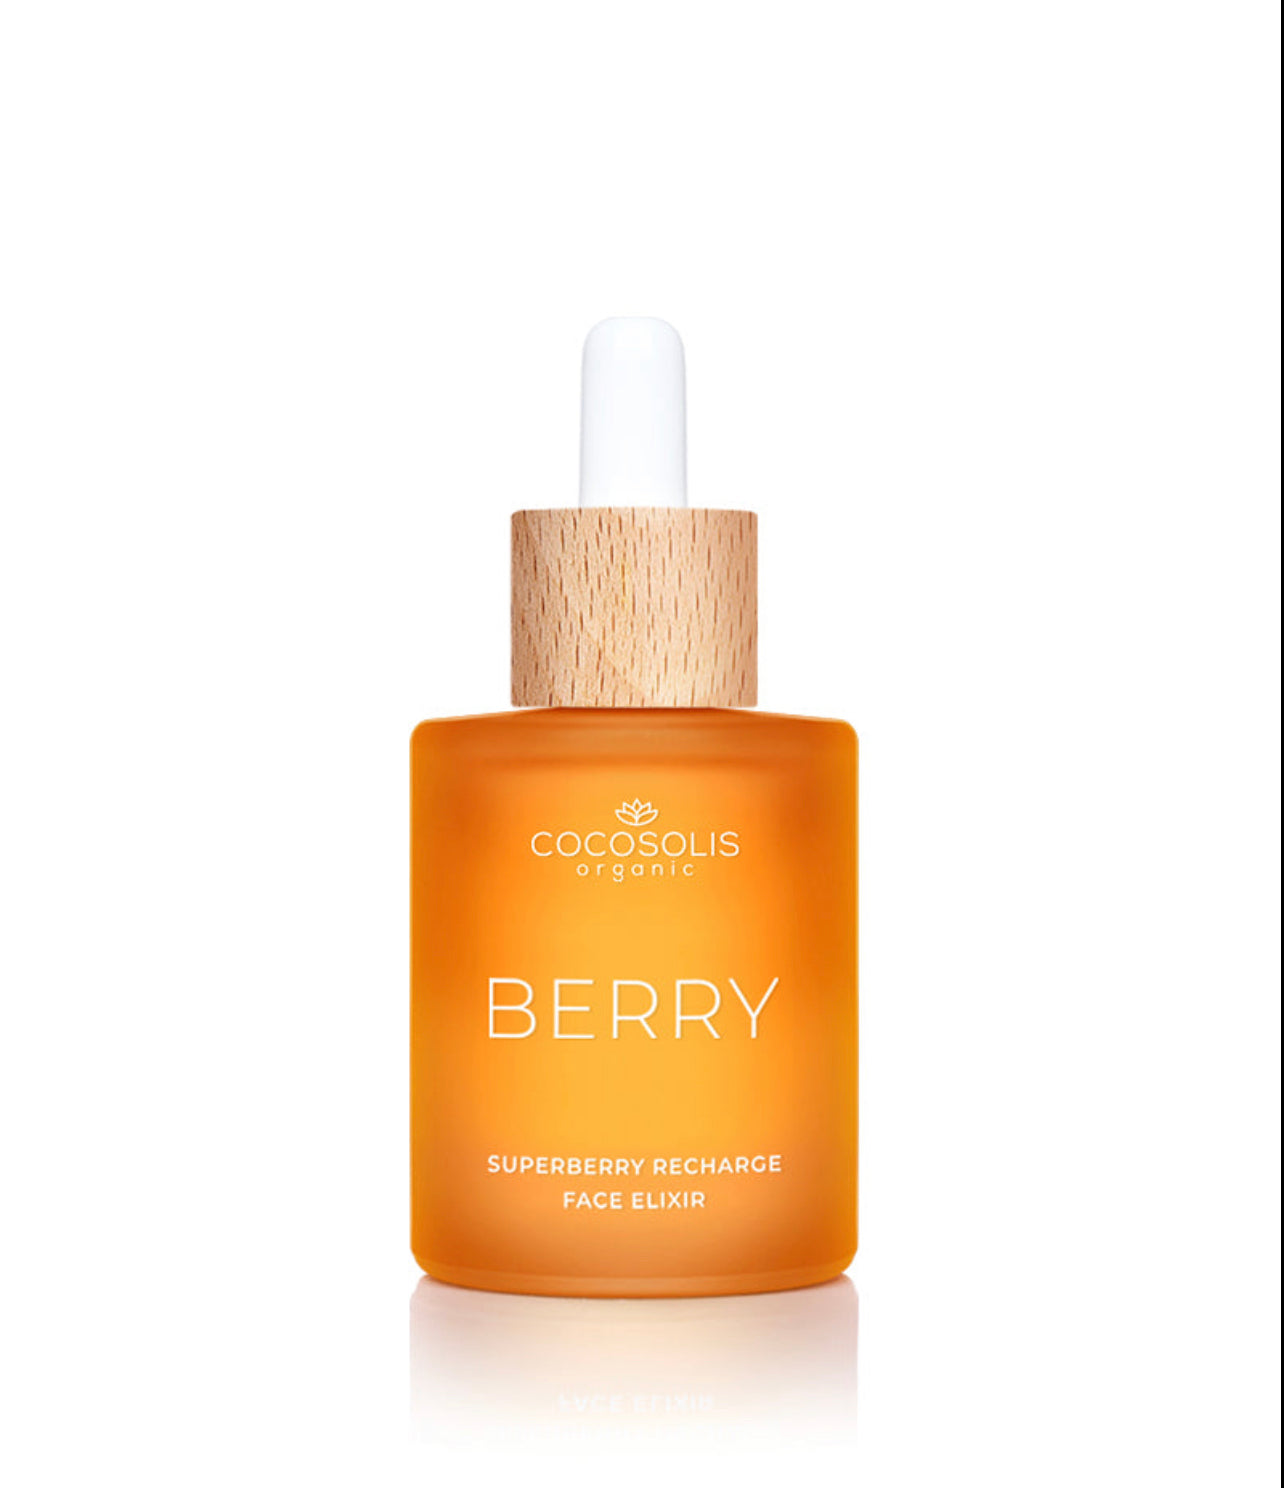 BERRY
Superberry Recharge Face Elixir